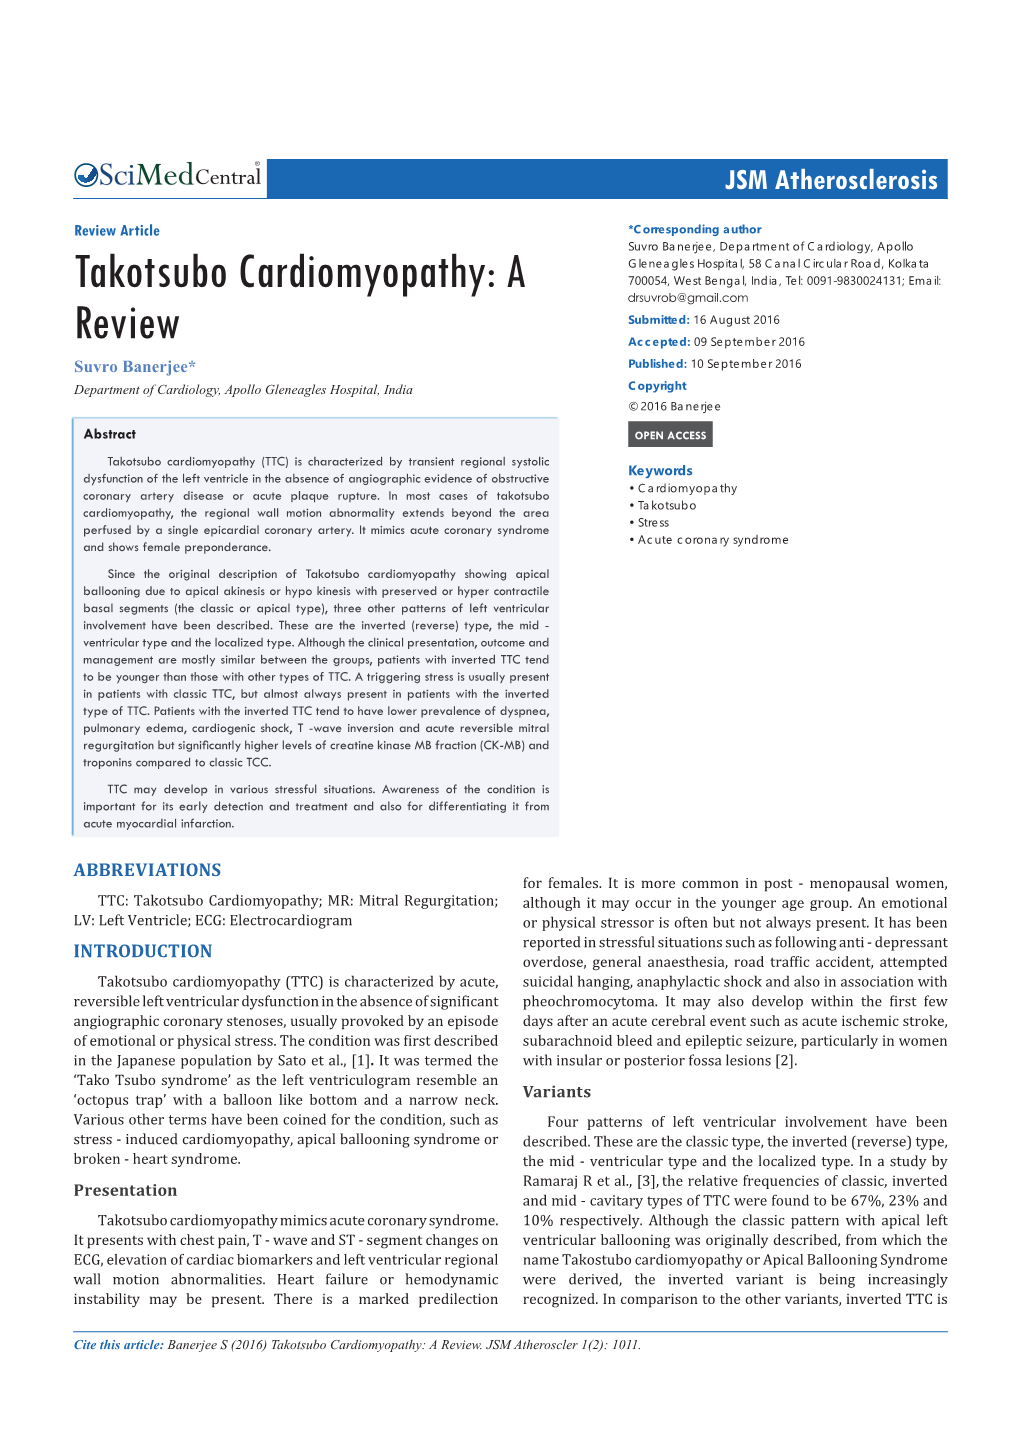 Takotsubo Cardiomyopathy: a 700054, West Bengal, India, Tel: 0091-9830024131; Email